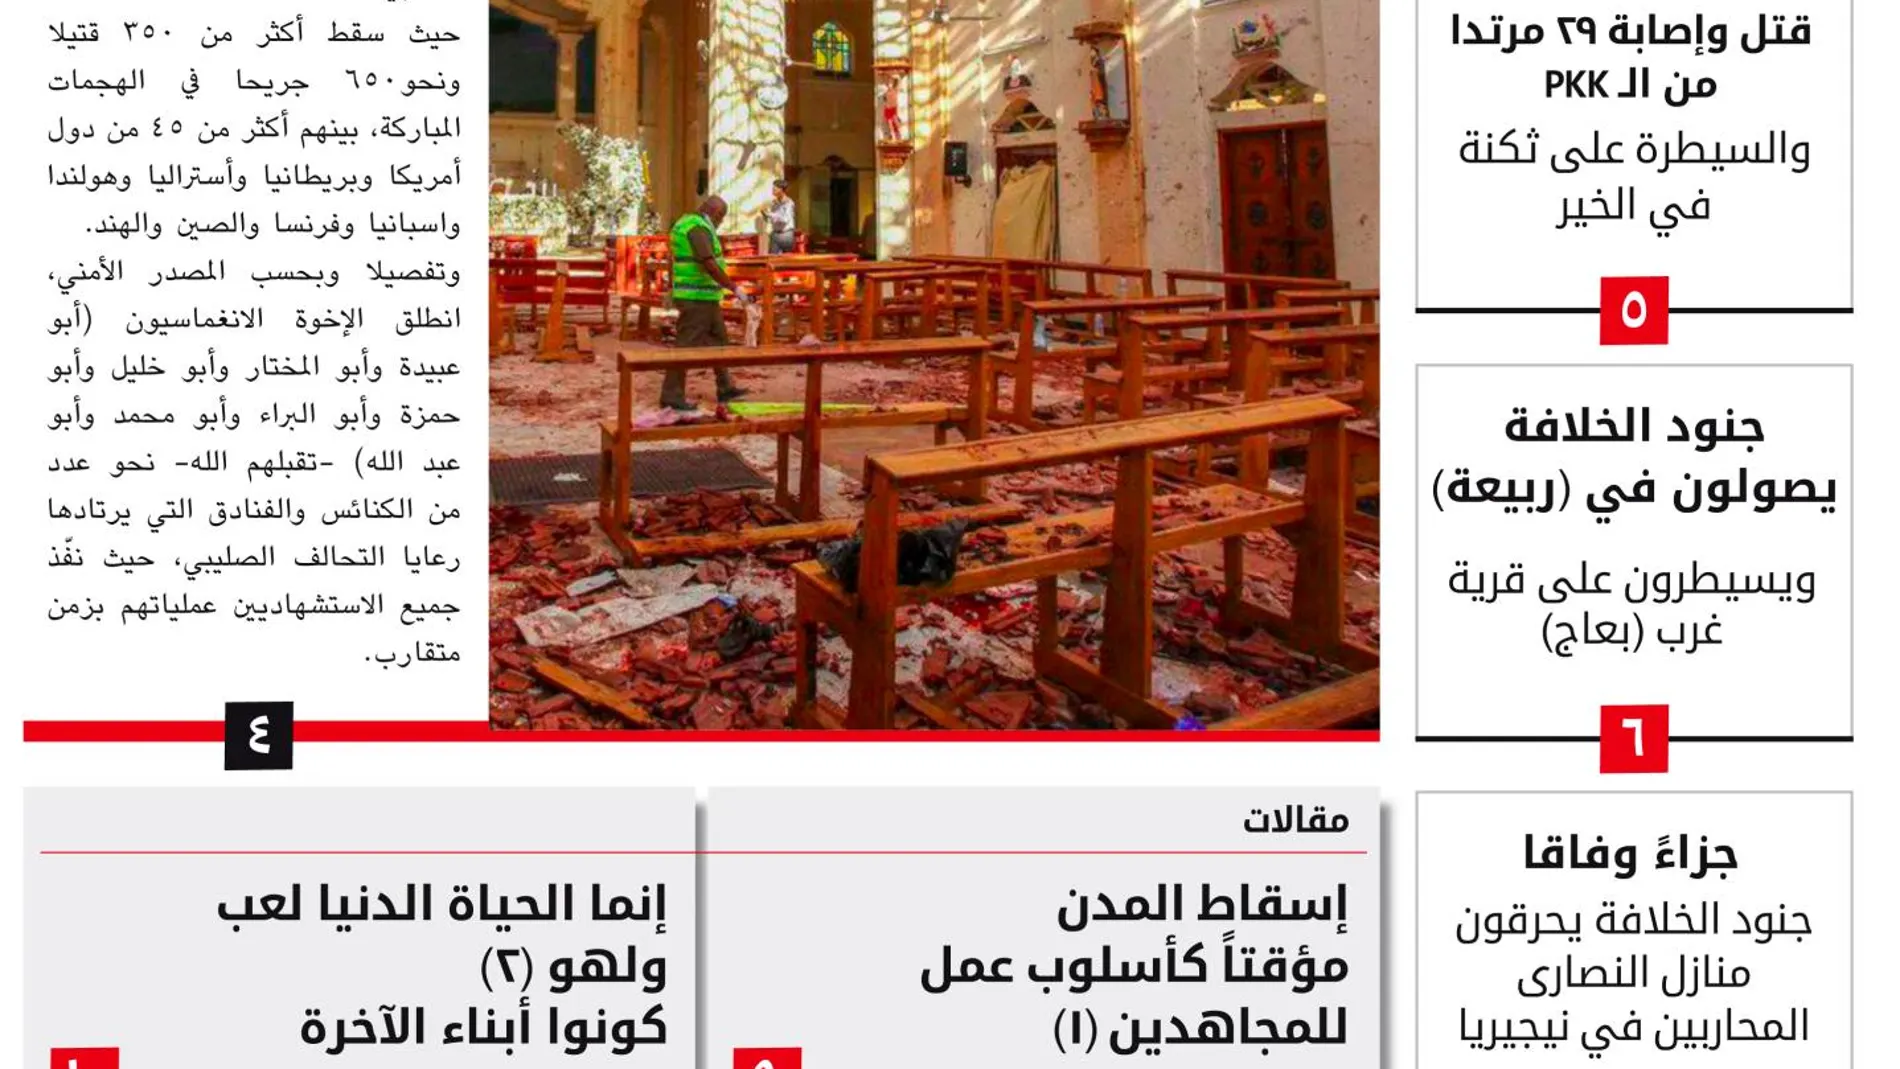 Portada de la revista “Al Naba"